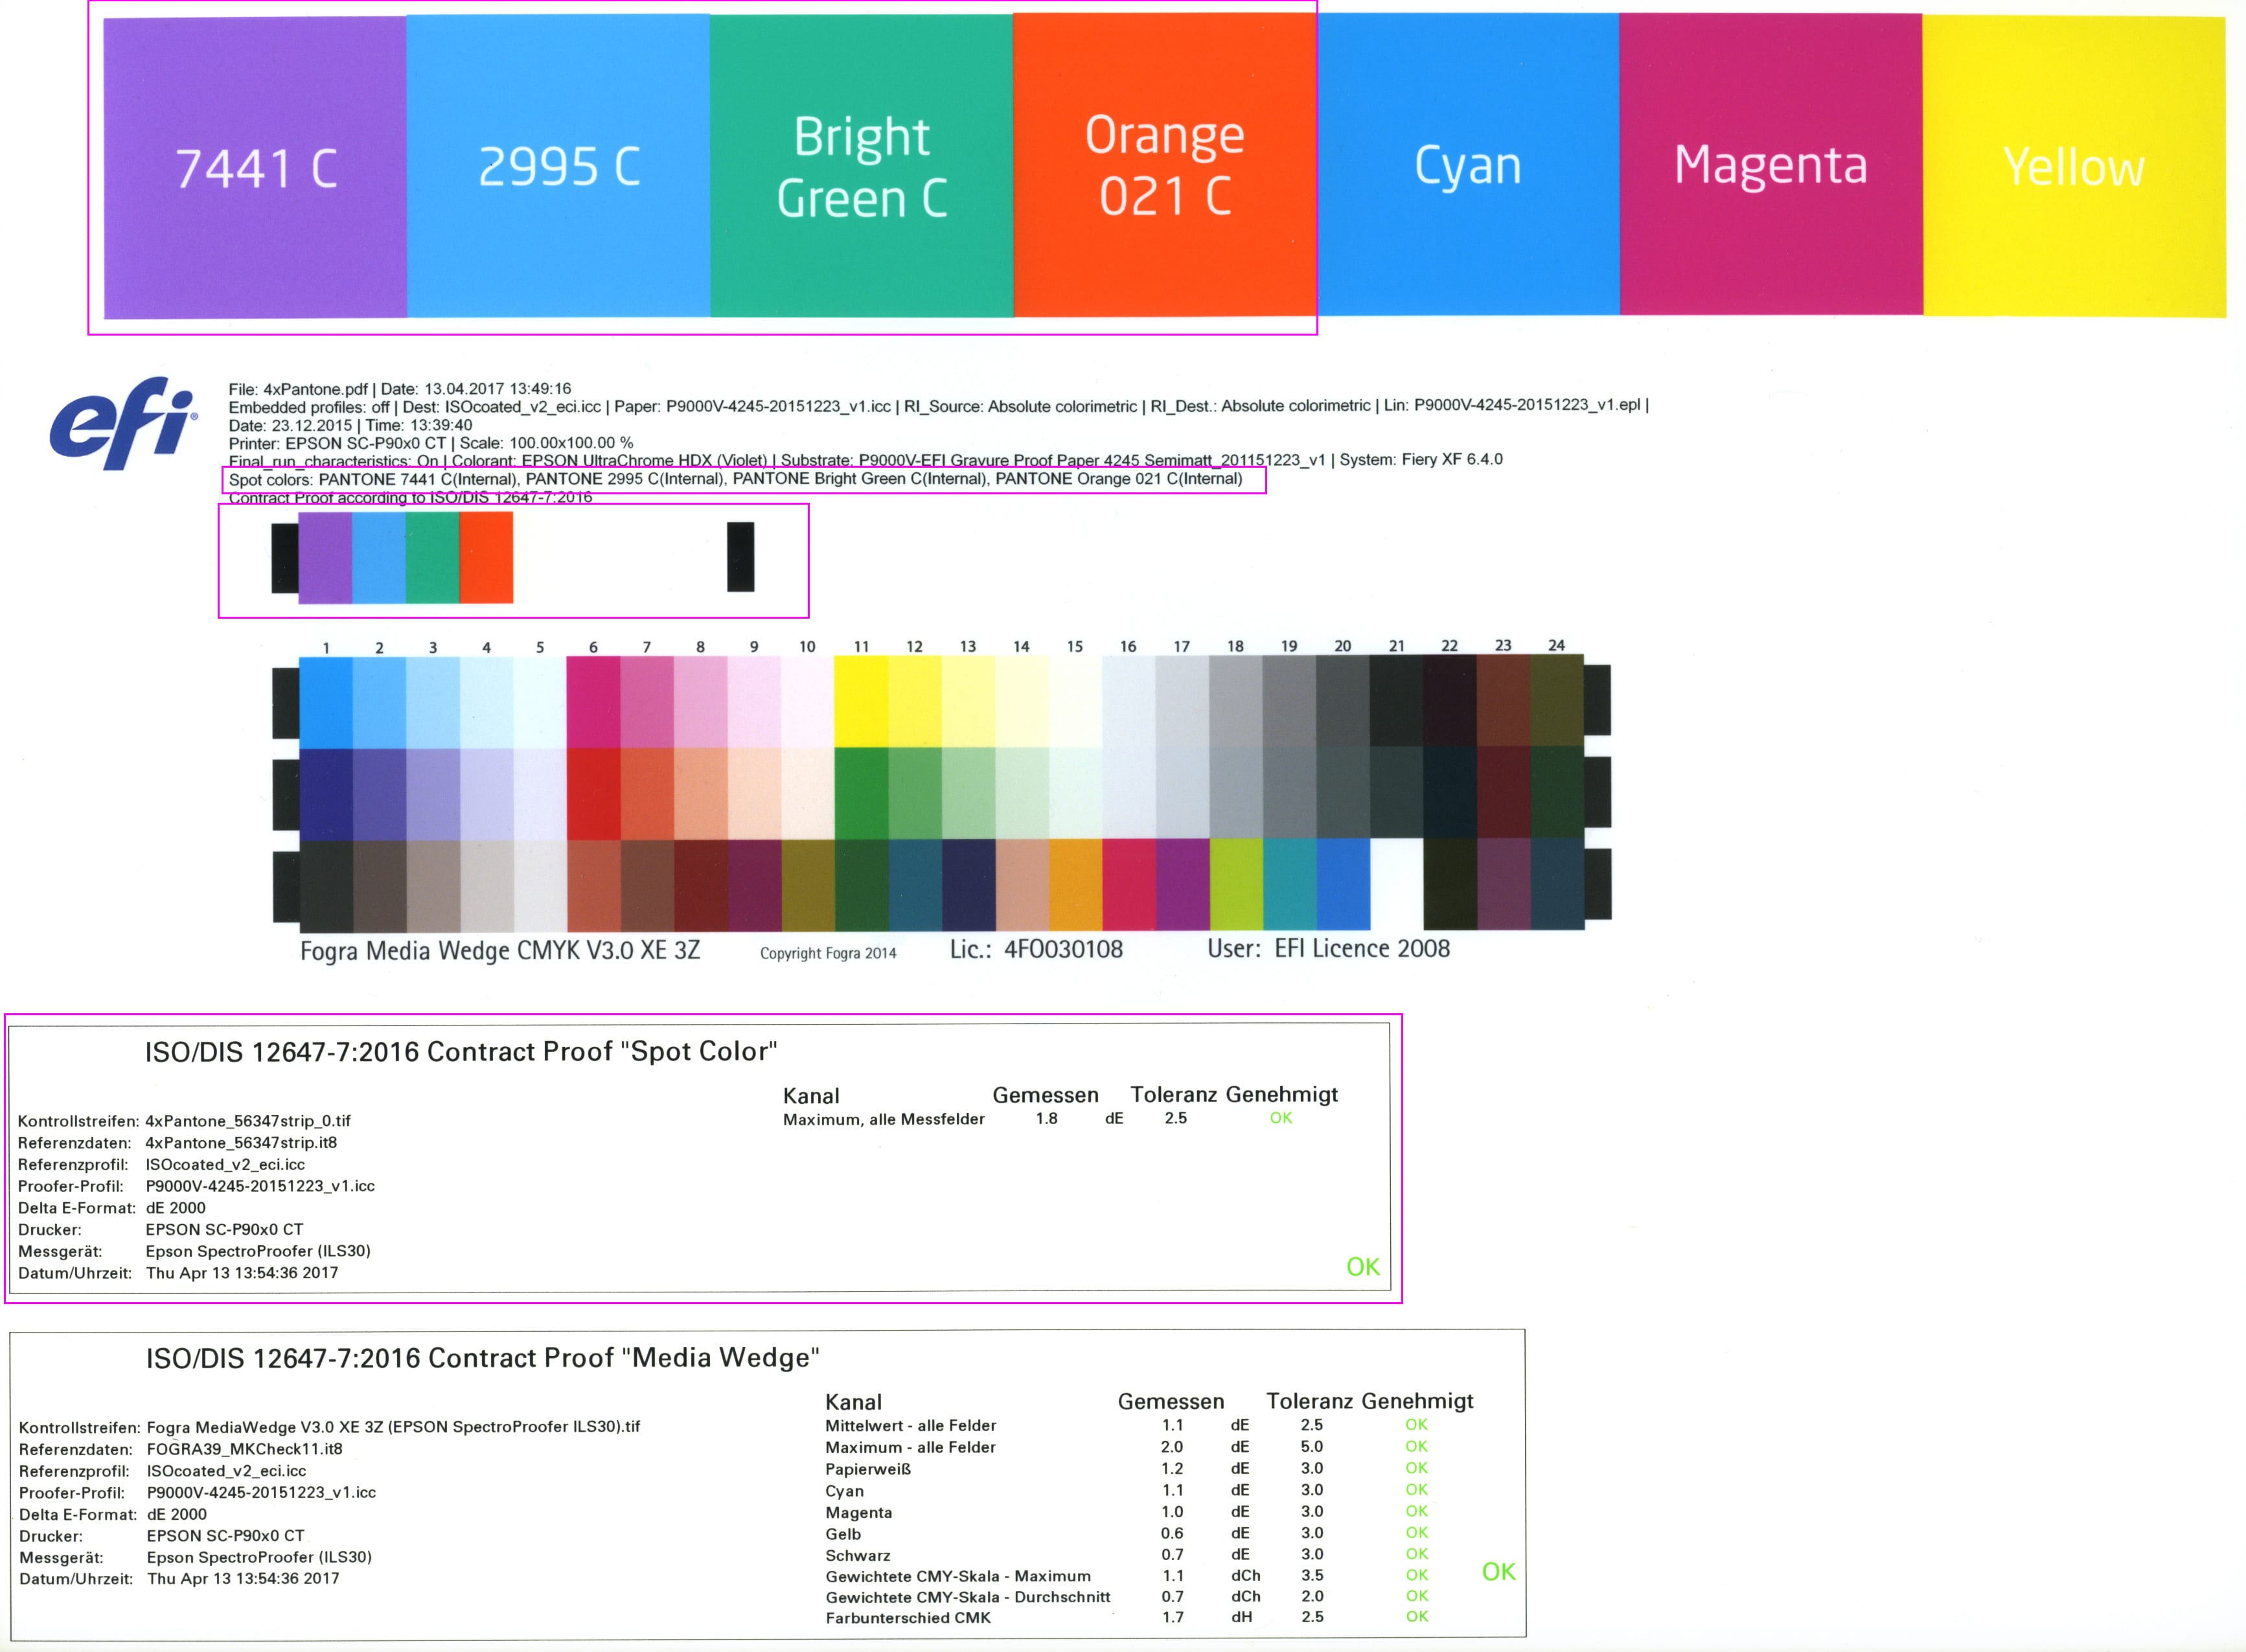 proof.de: Spotcolor mediawedge / spotcolor mediawedge med utvärdering enligt ISO/DIS 12647-7:2016